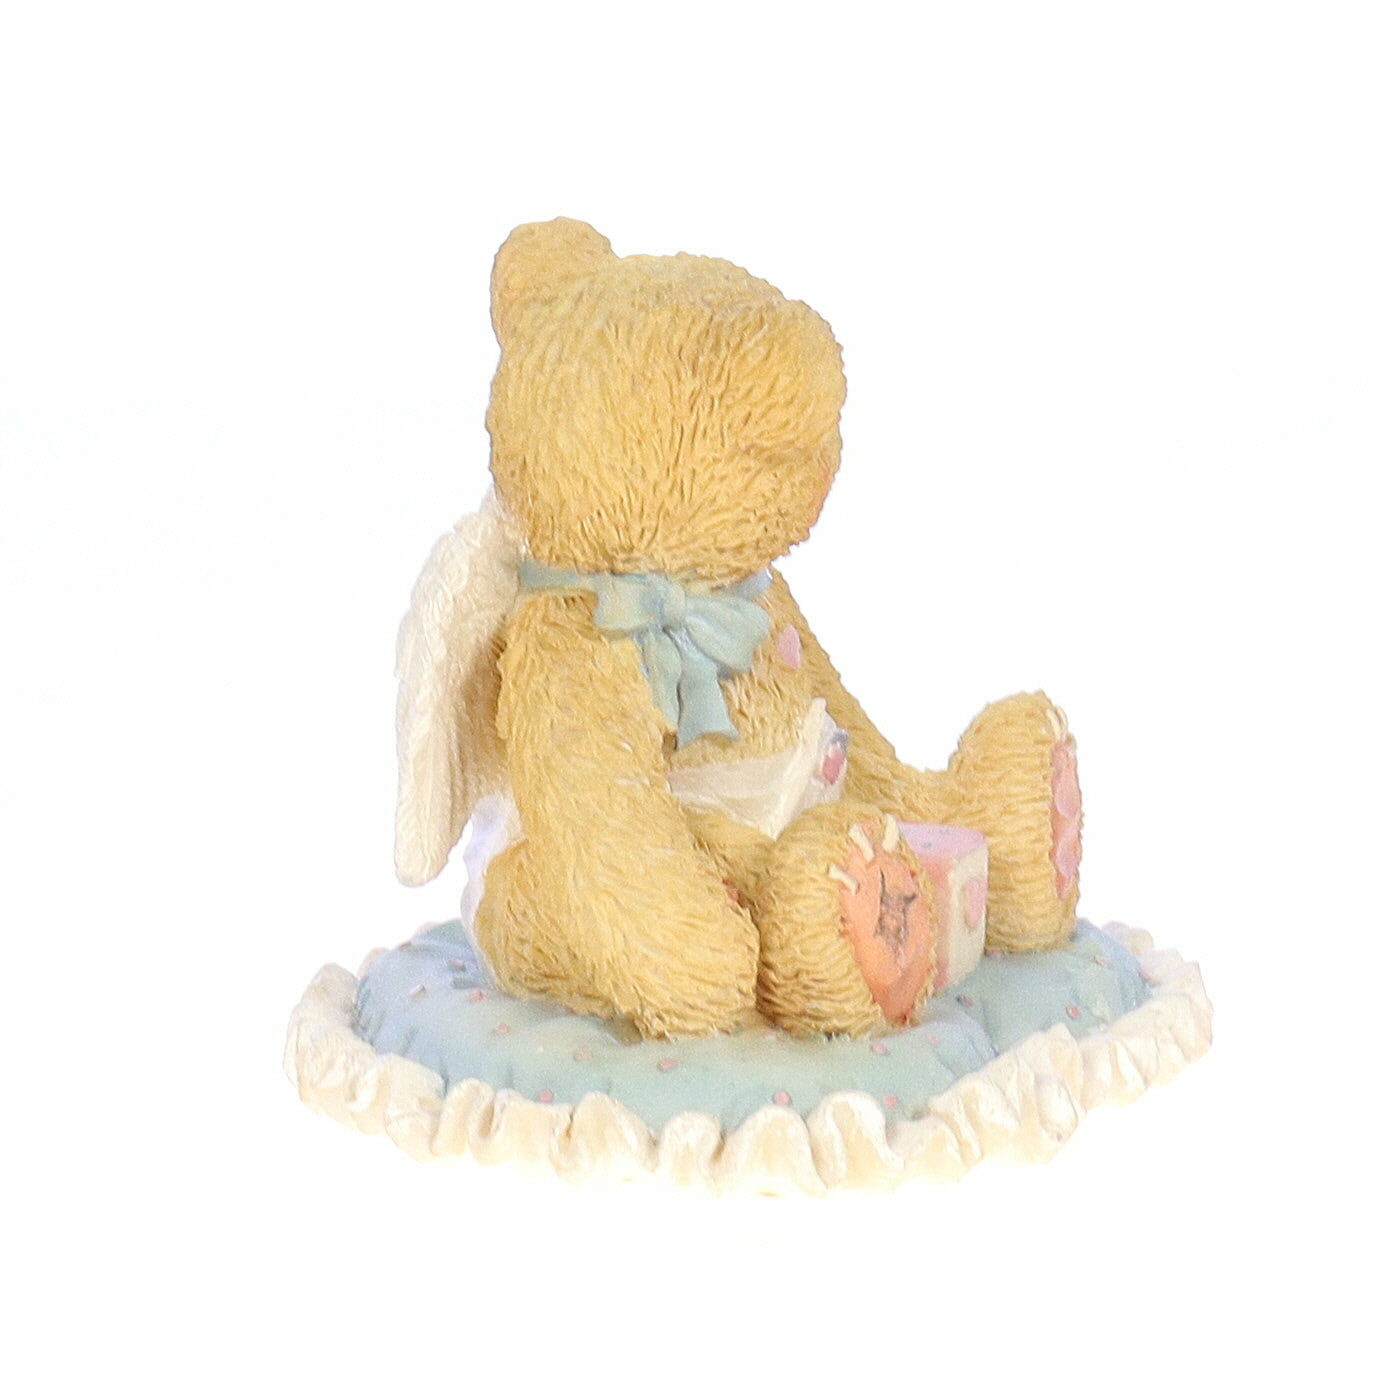 Cherished Teddies Vintage Resin New Baby Figurine 103659 Little Bundle of Joy